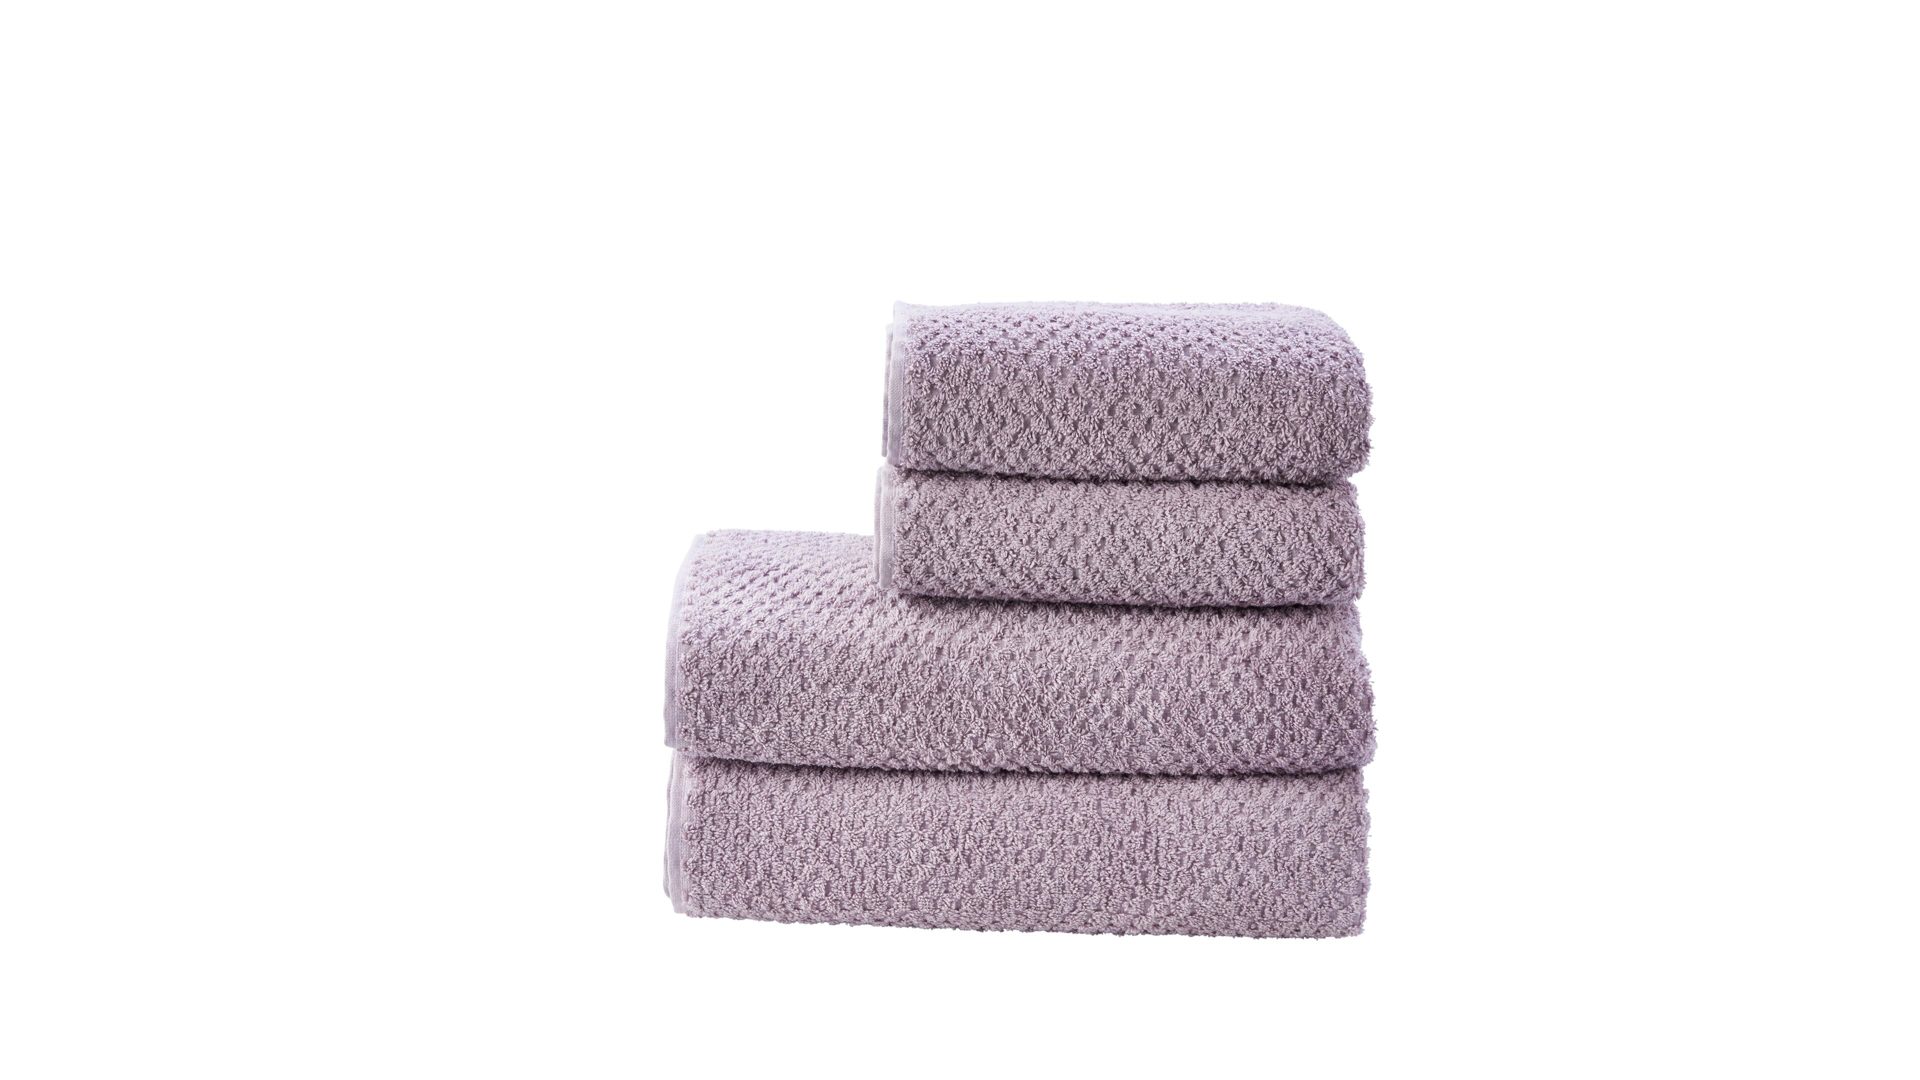 Handtuch-Set Done® by karabel home company aus Stoff in Pastellfarben done Handtuch-Set Provence Honeycomb altrosafarbene Baumwolle  – vierteilig